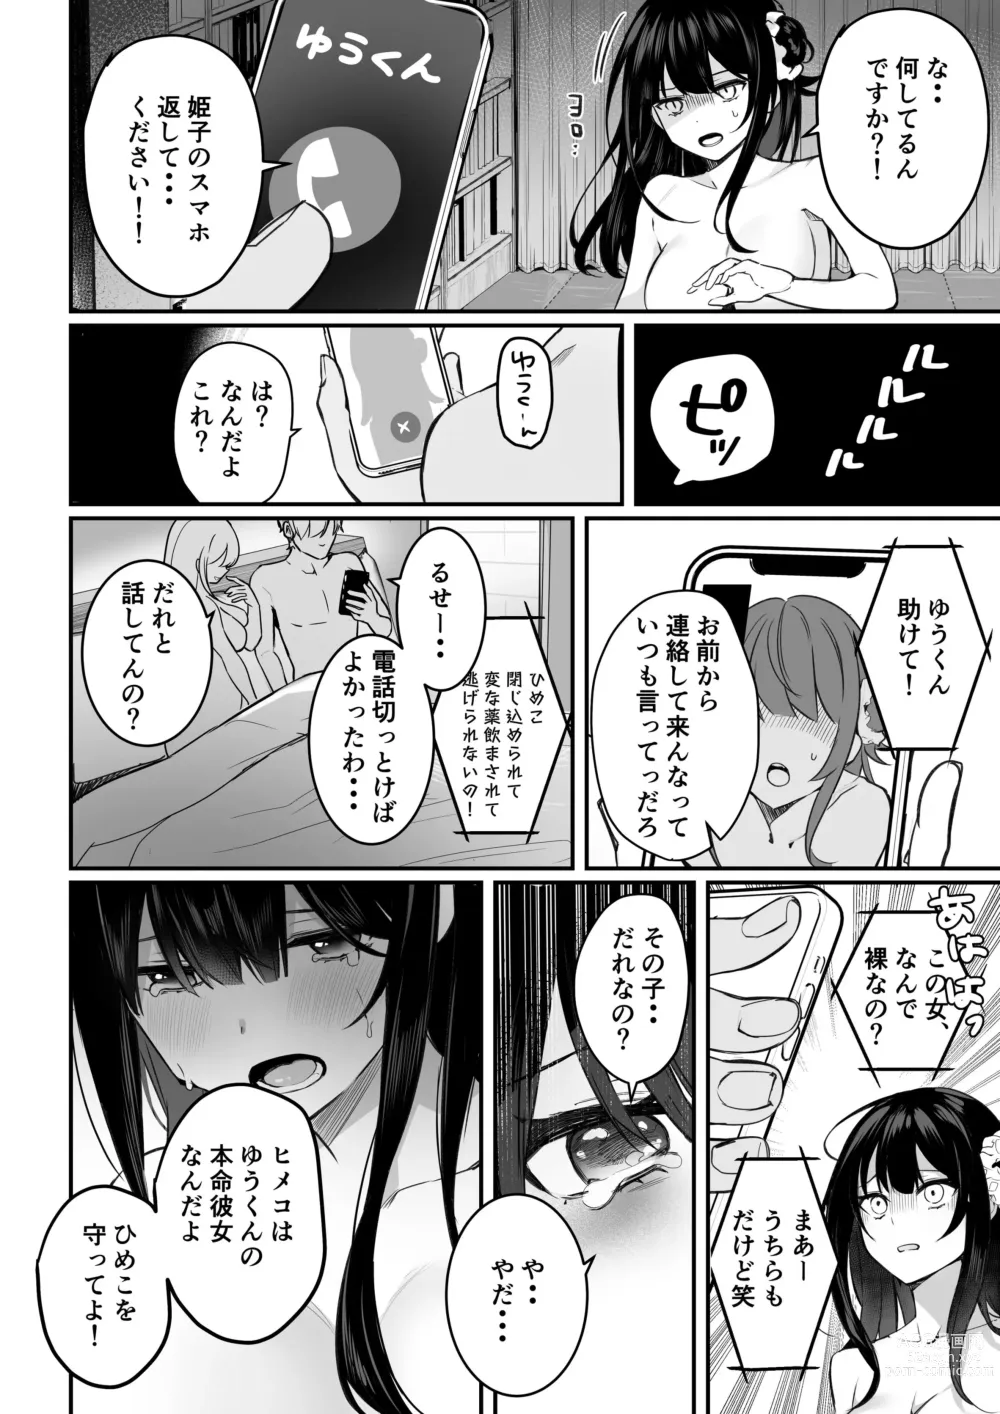 Page 4 of doujinshi Himeko Manga